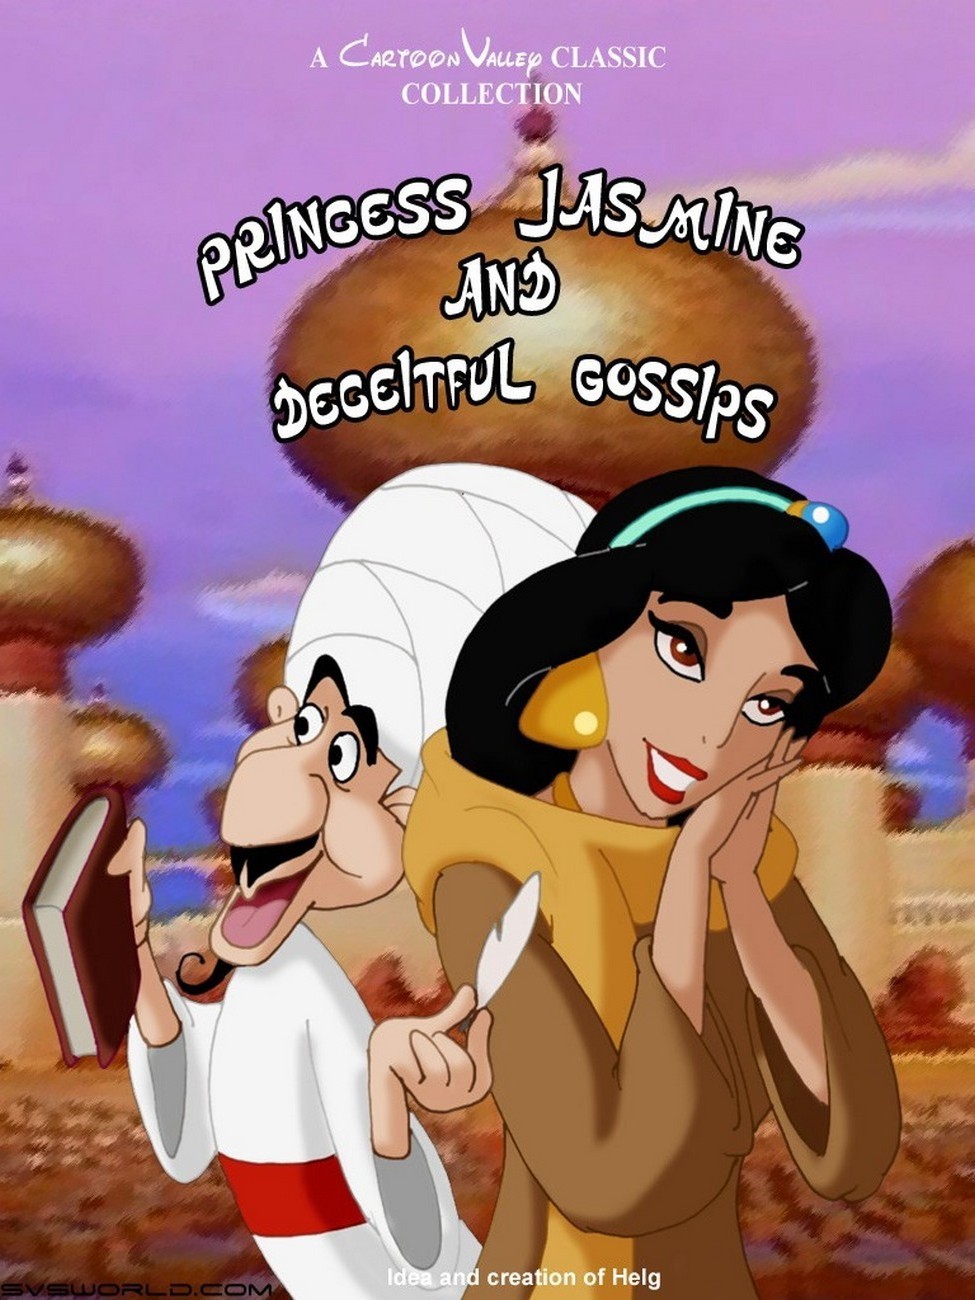 Cartoon Valley - Princess Jasmine And Deceitful Gossips